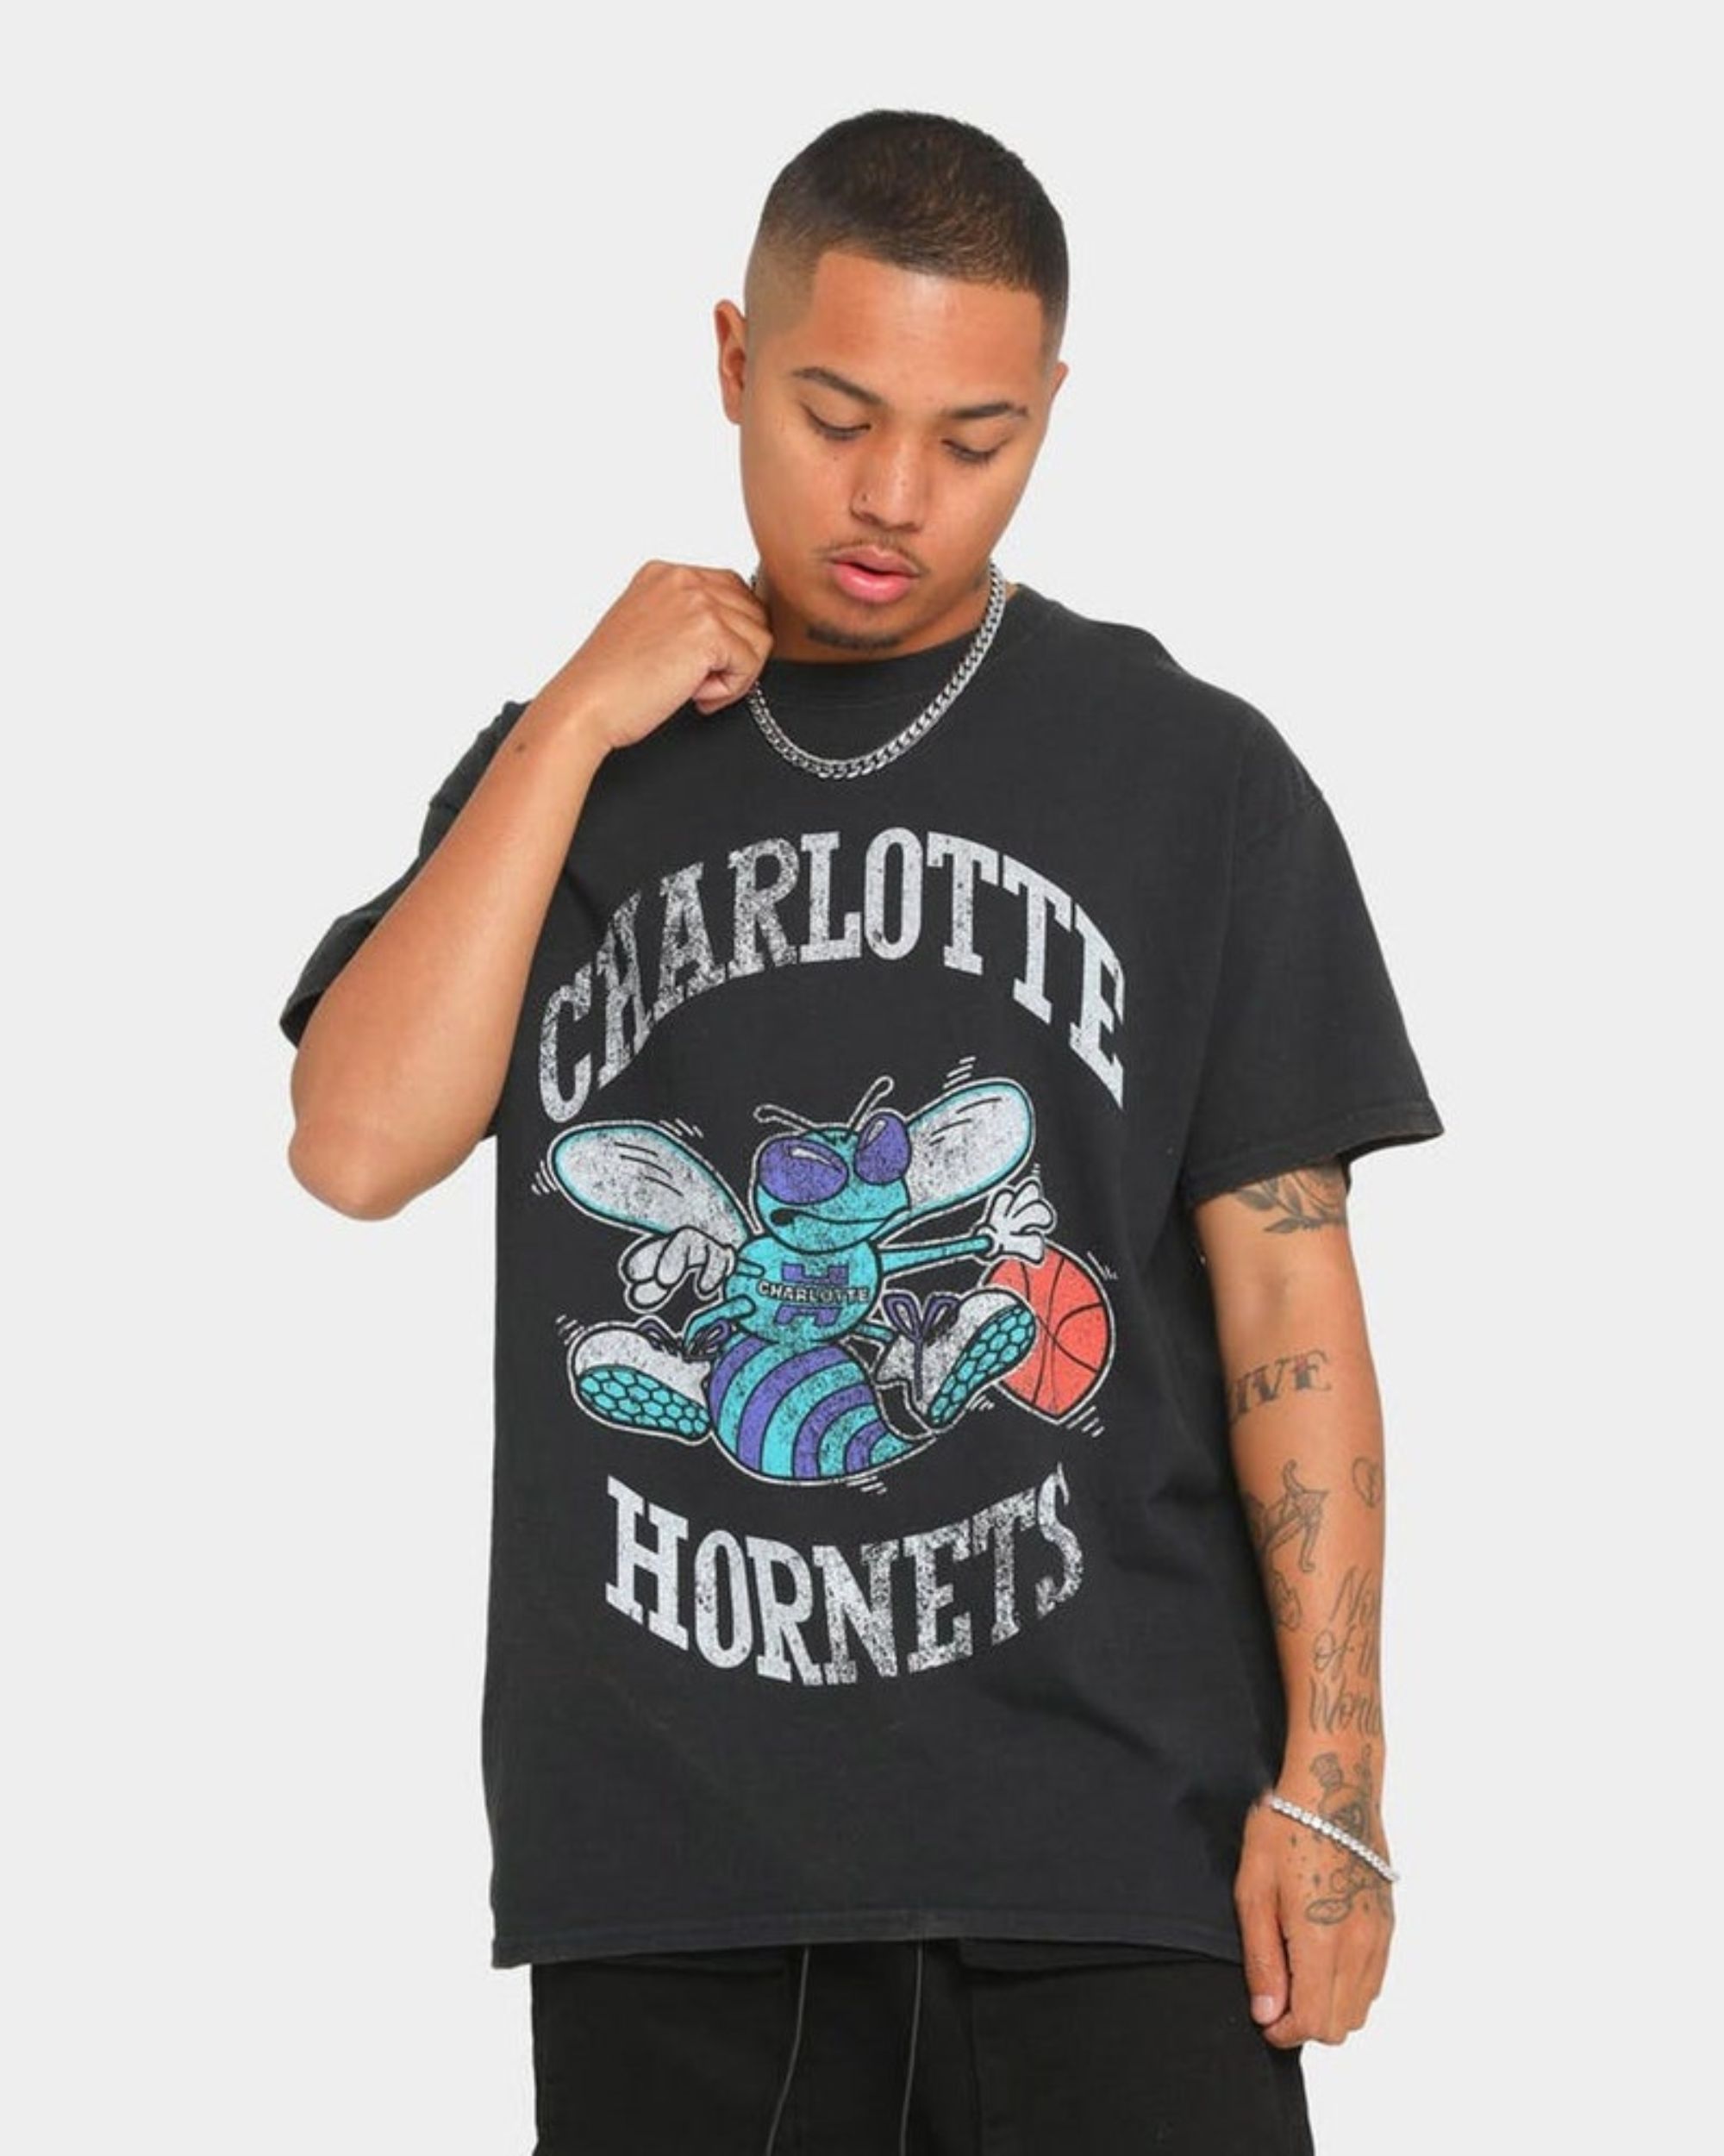 hornets shirts